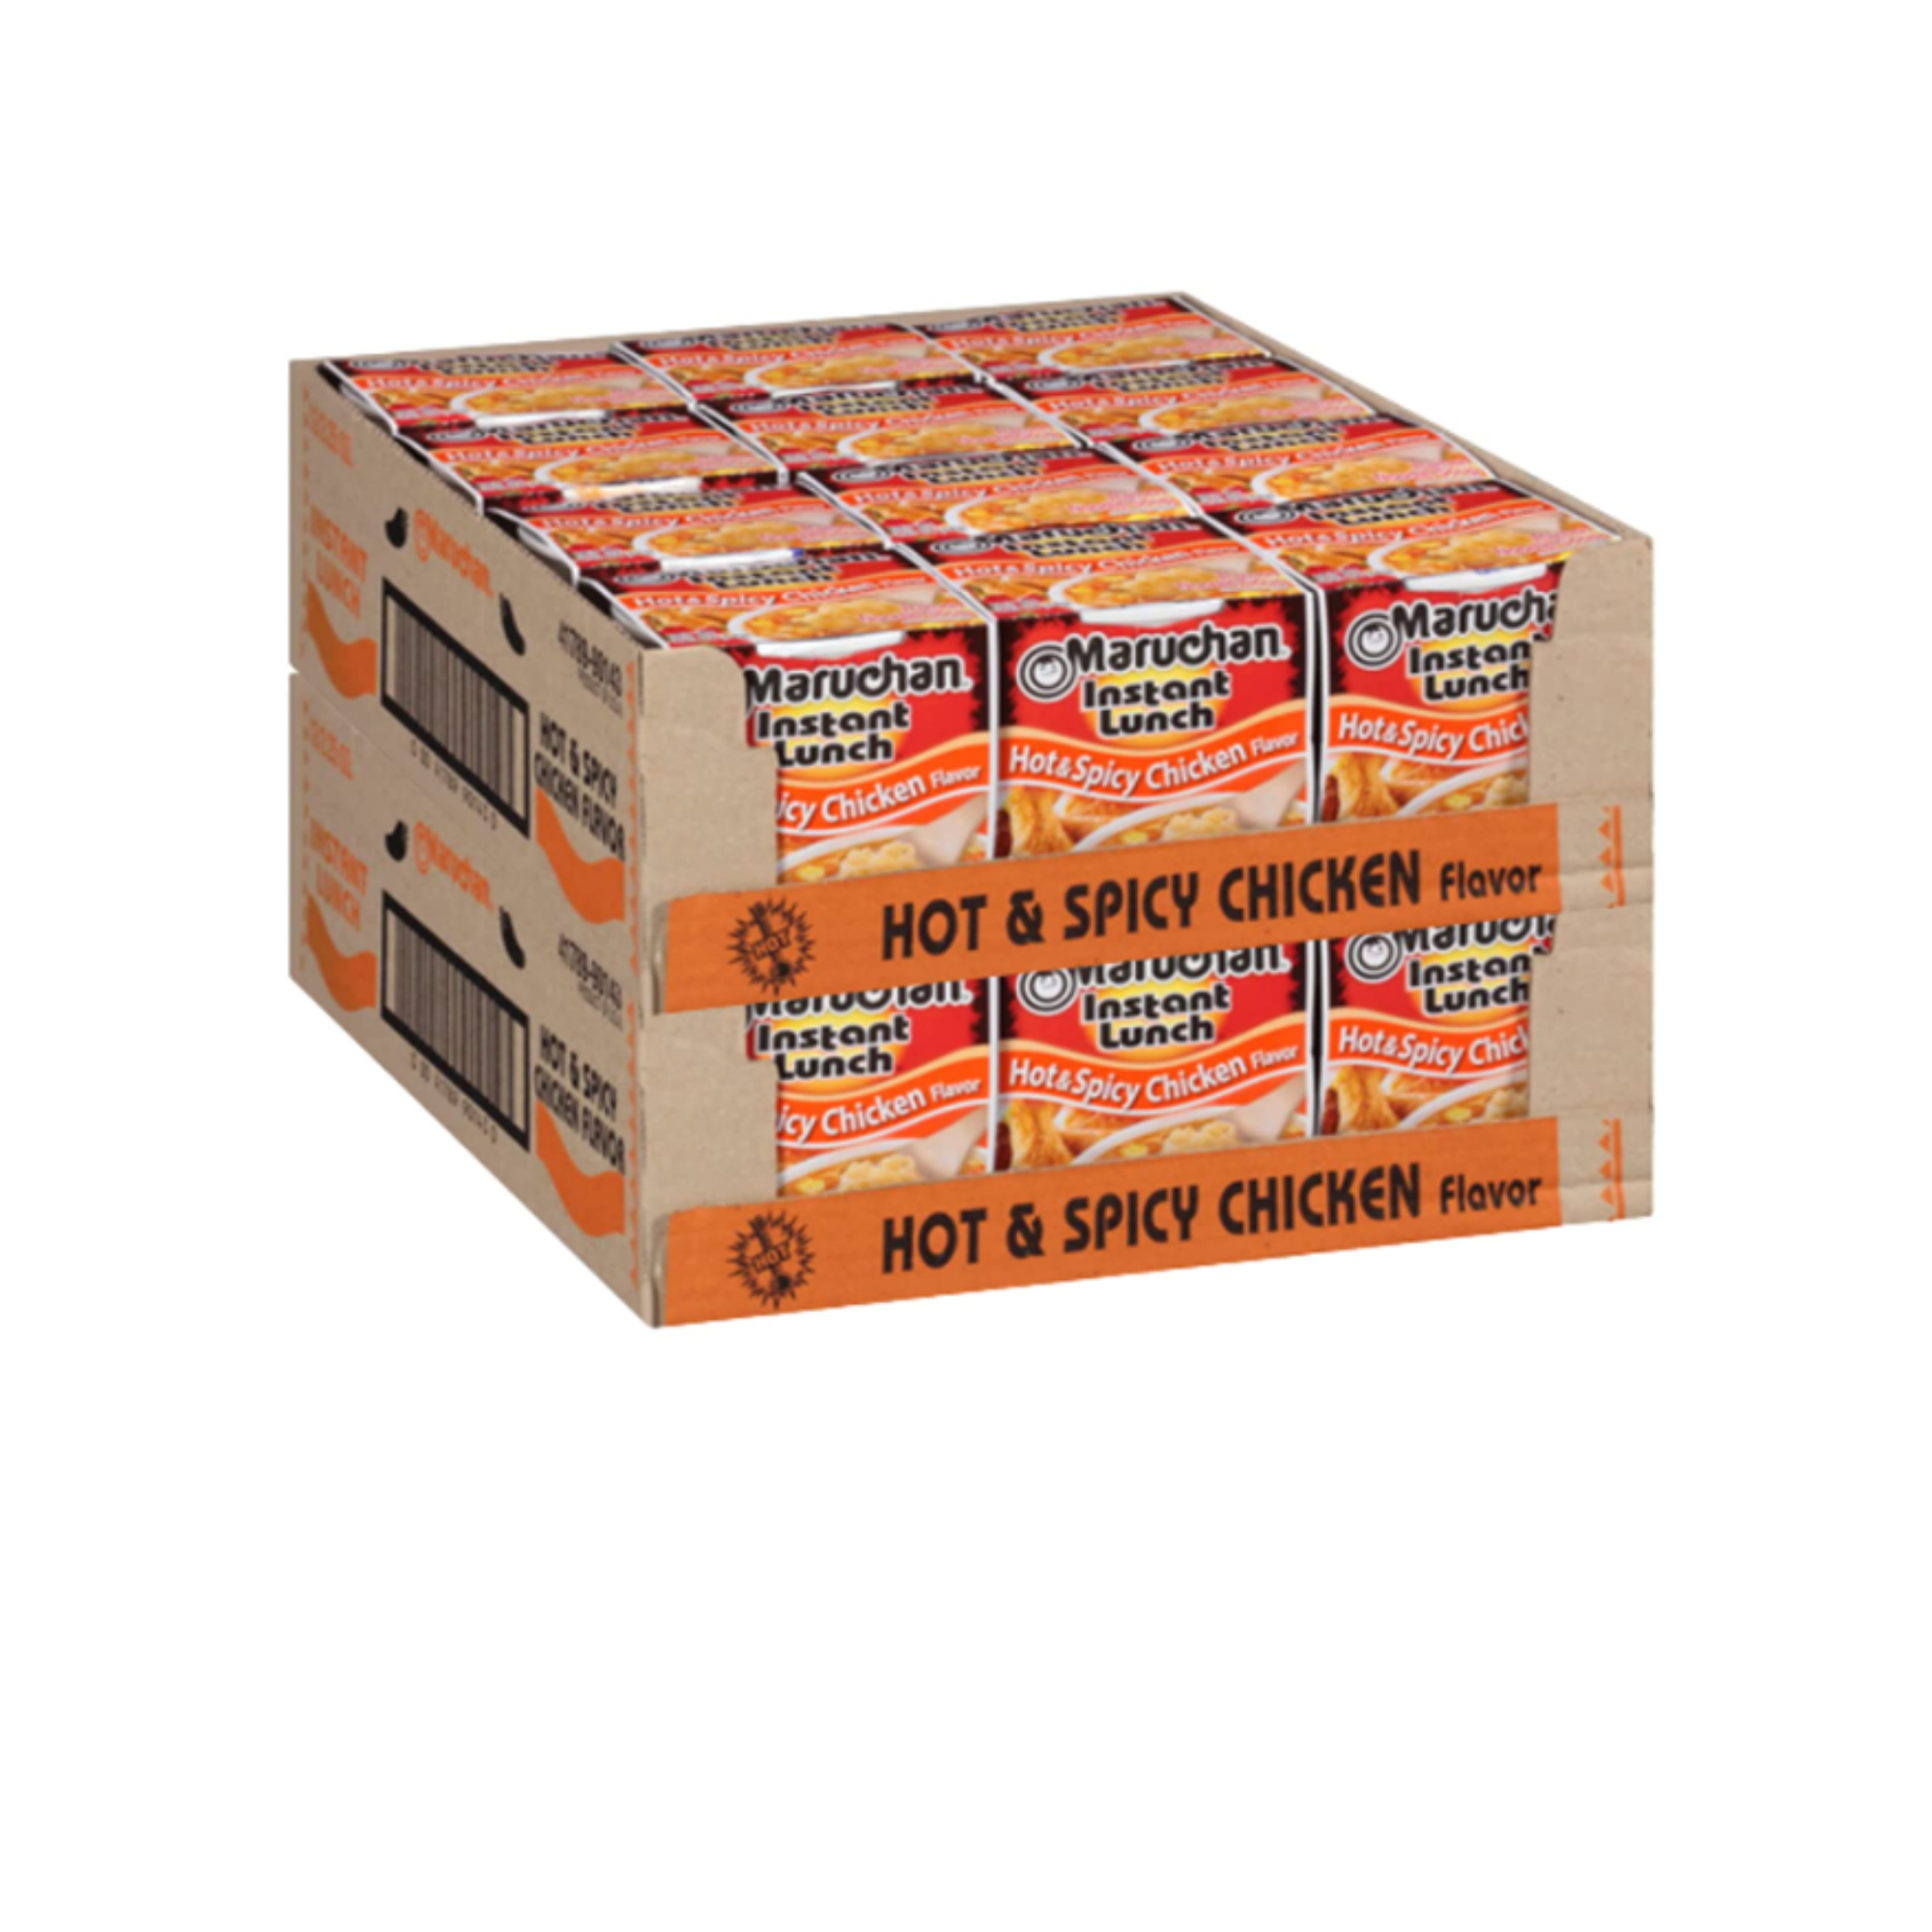 Instant Ramen Noodle Soup– Pork Flavor Noodles Pack, Bulk 3 oz Package –  with 1-Set of Reusable Stainless Steel Chopsticks(24 Individual Packs) 